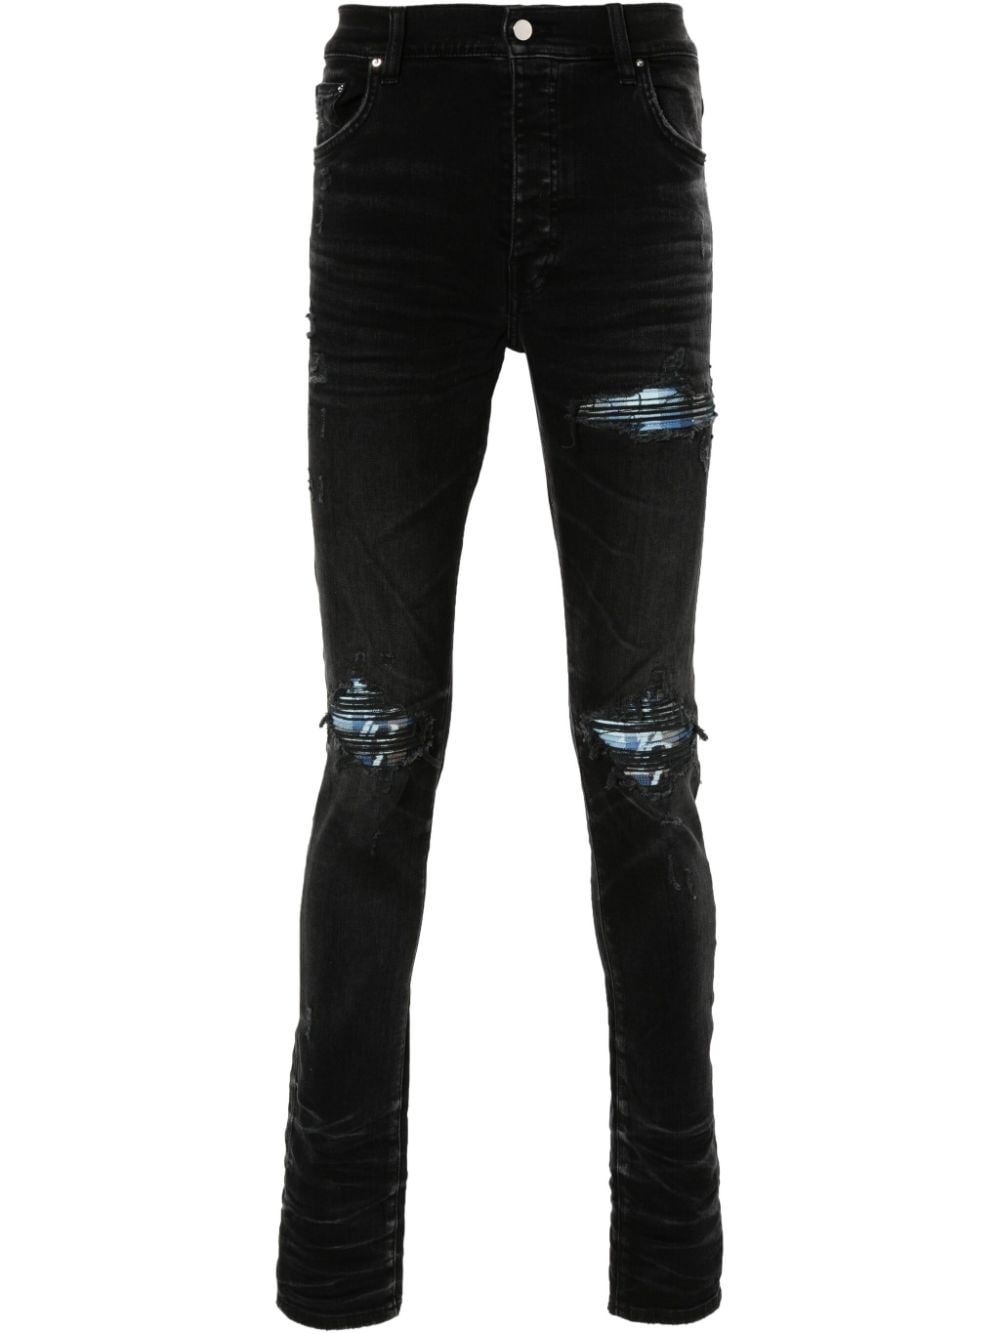 Plaid MX1 mid-rise skinny jeans - 1